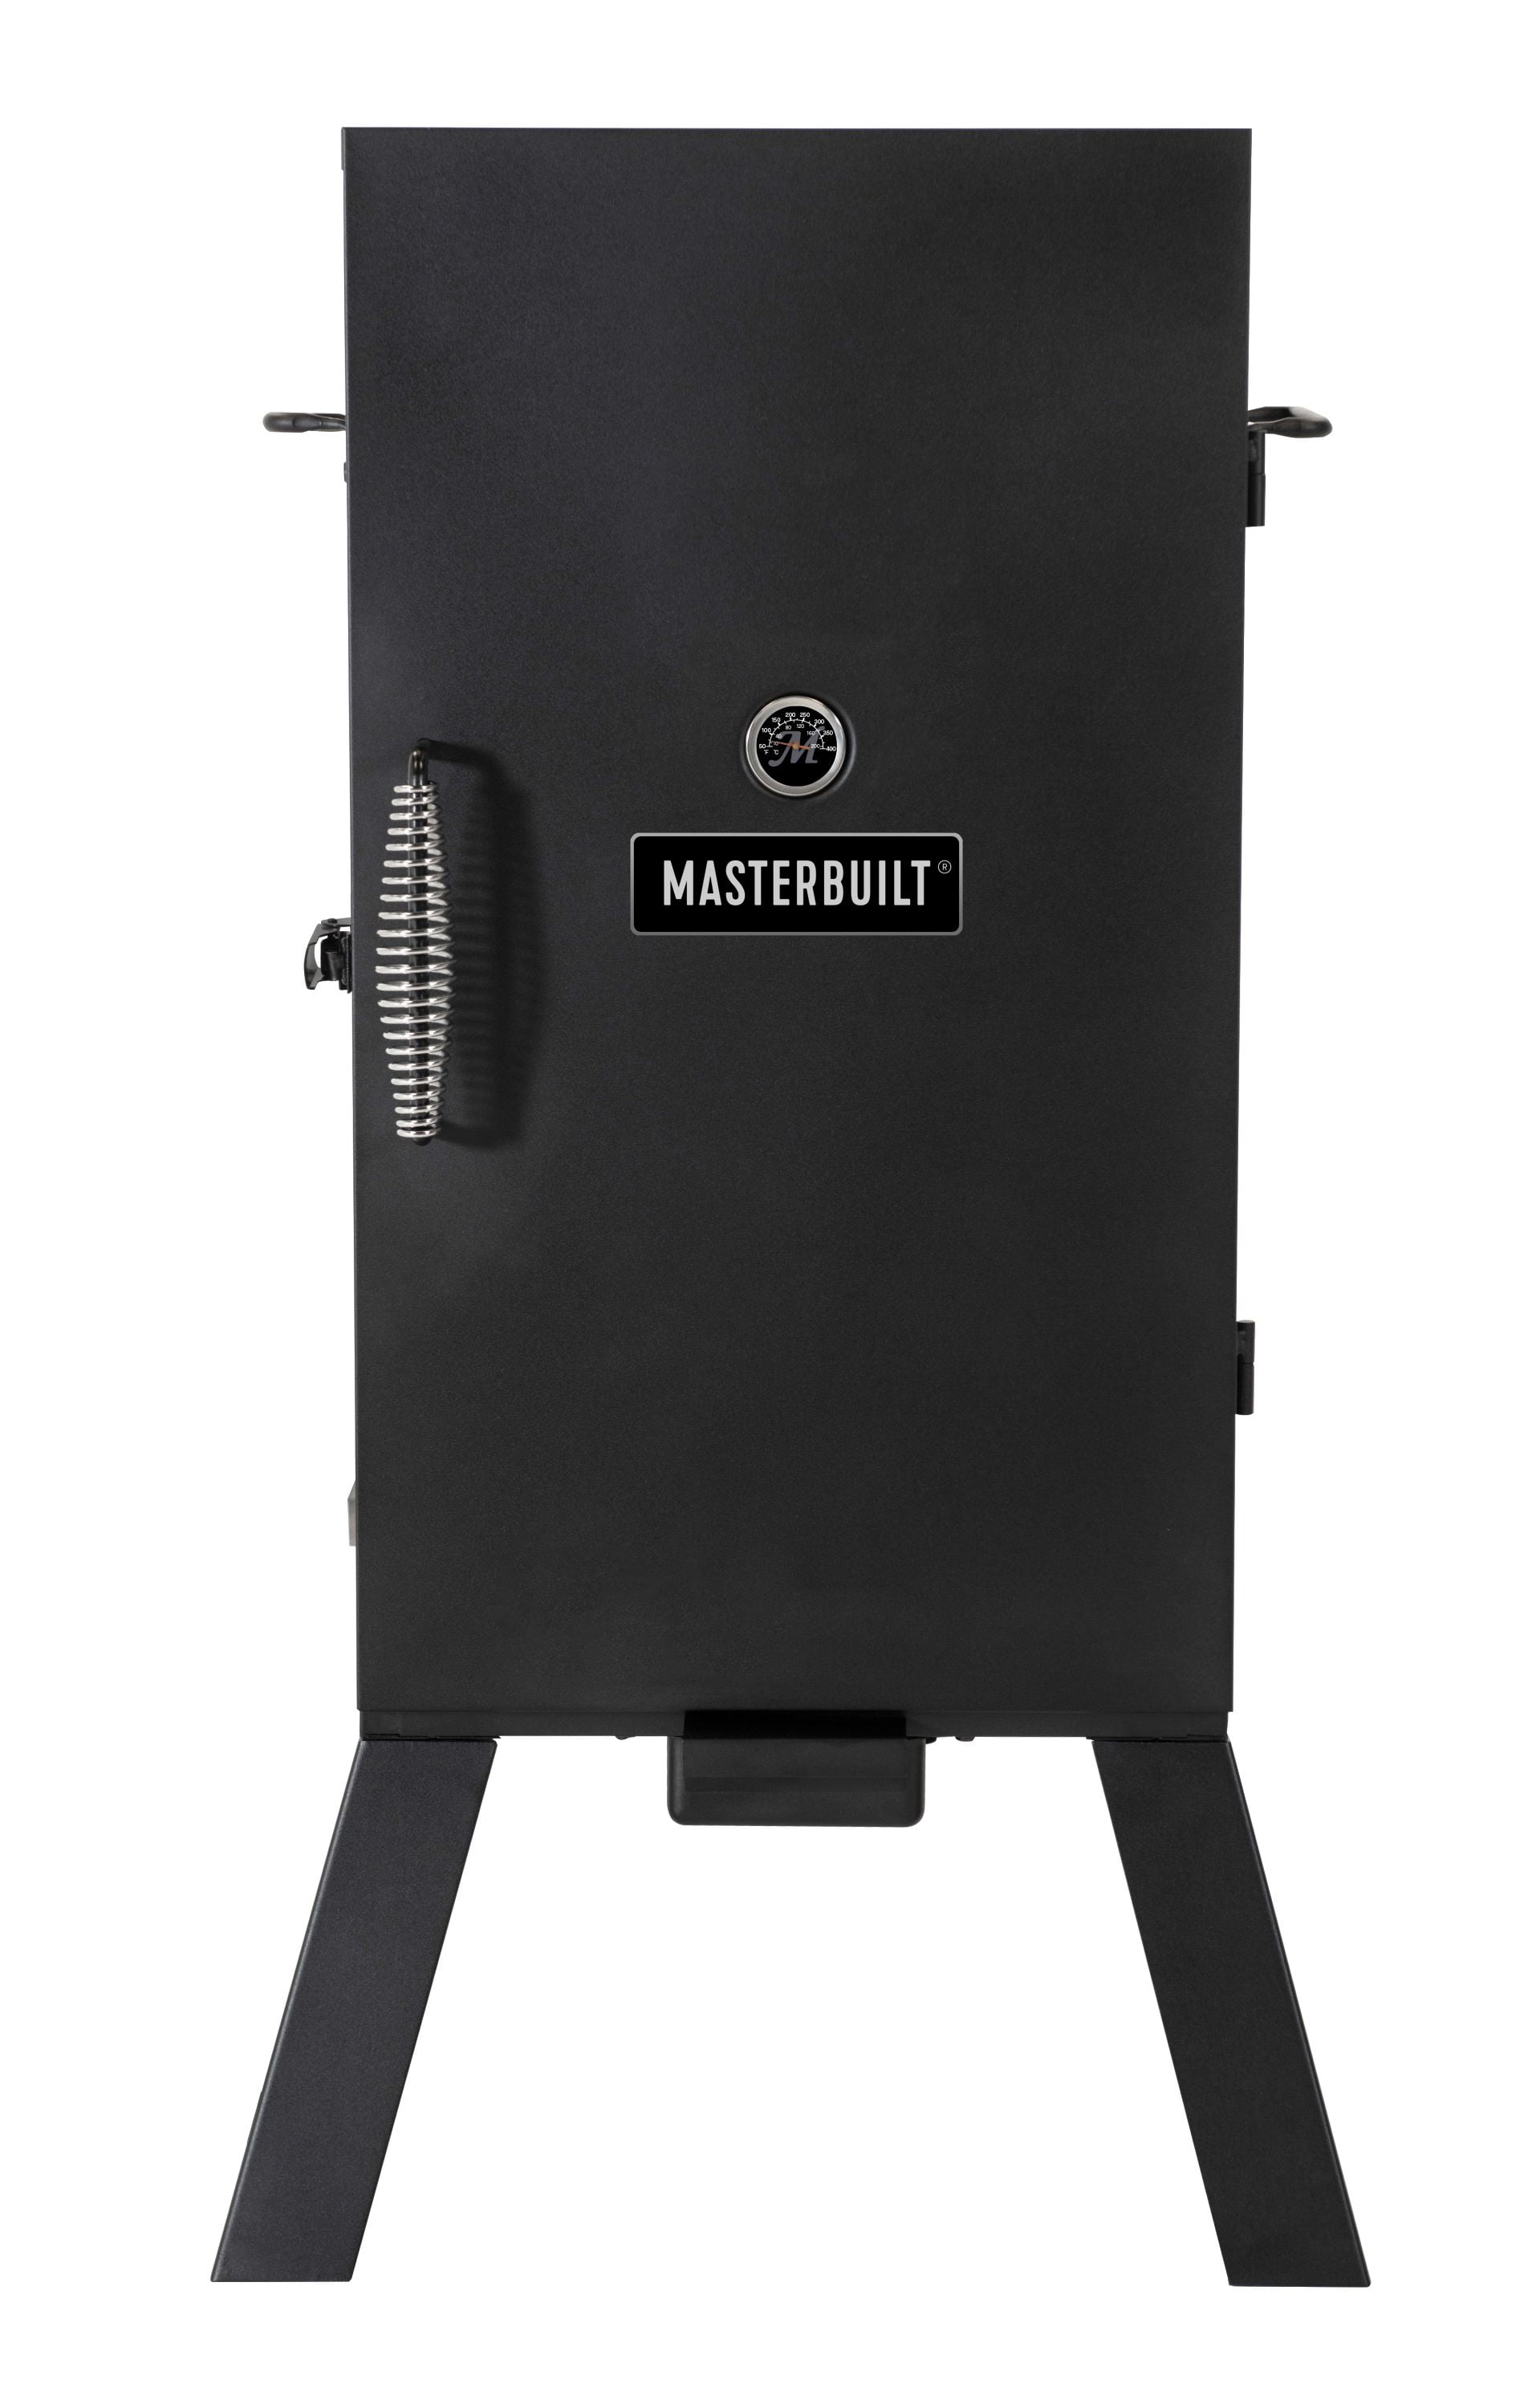 Masterbuilt 30-inch Analog Electric Smoker in Black - Walmart.com